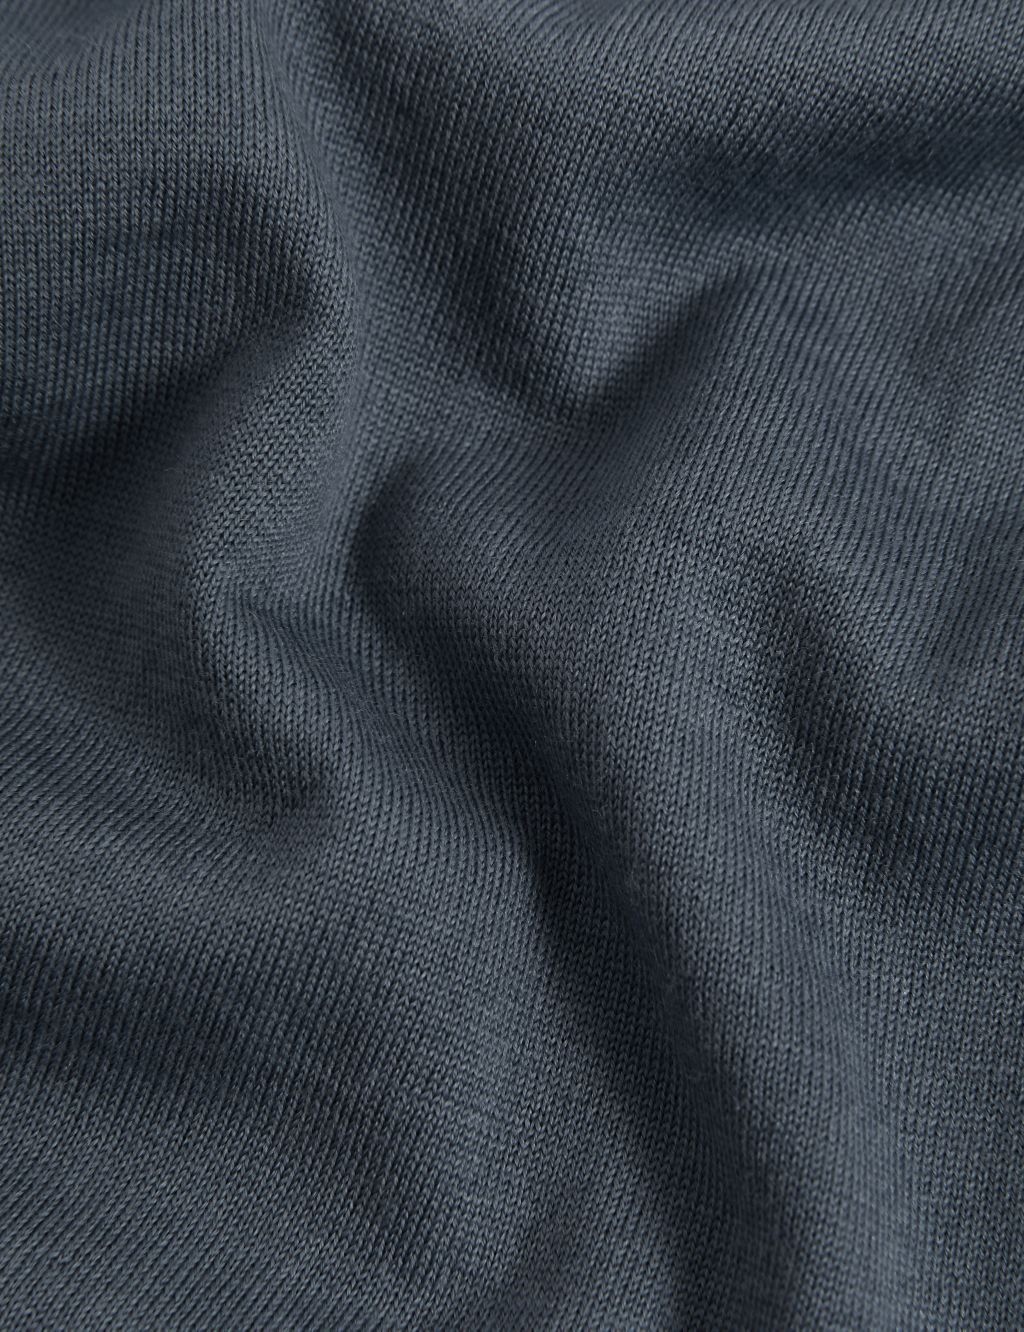 Pure Extra Fine Merino Wool Jumper image 2